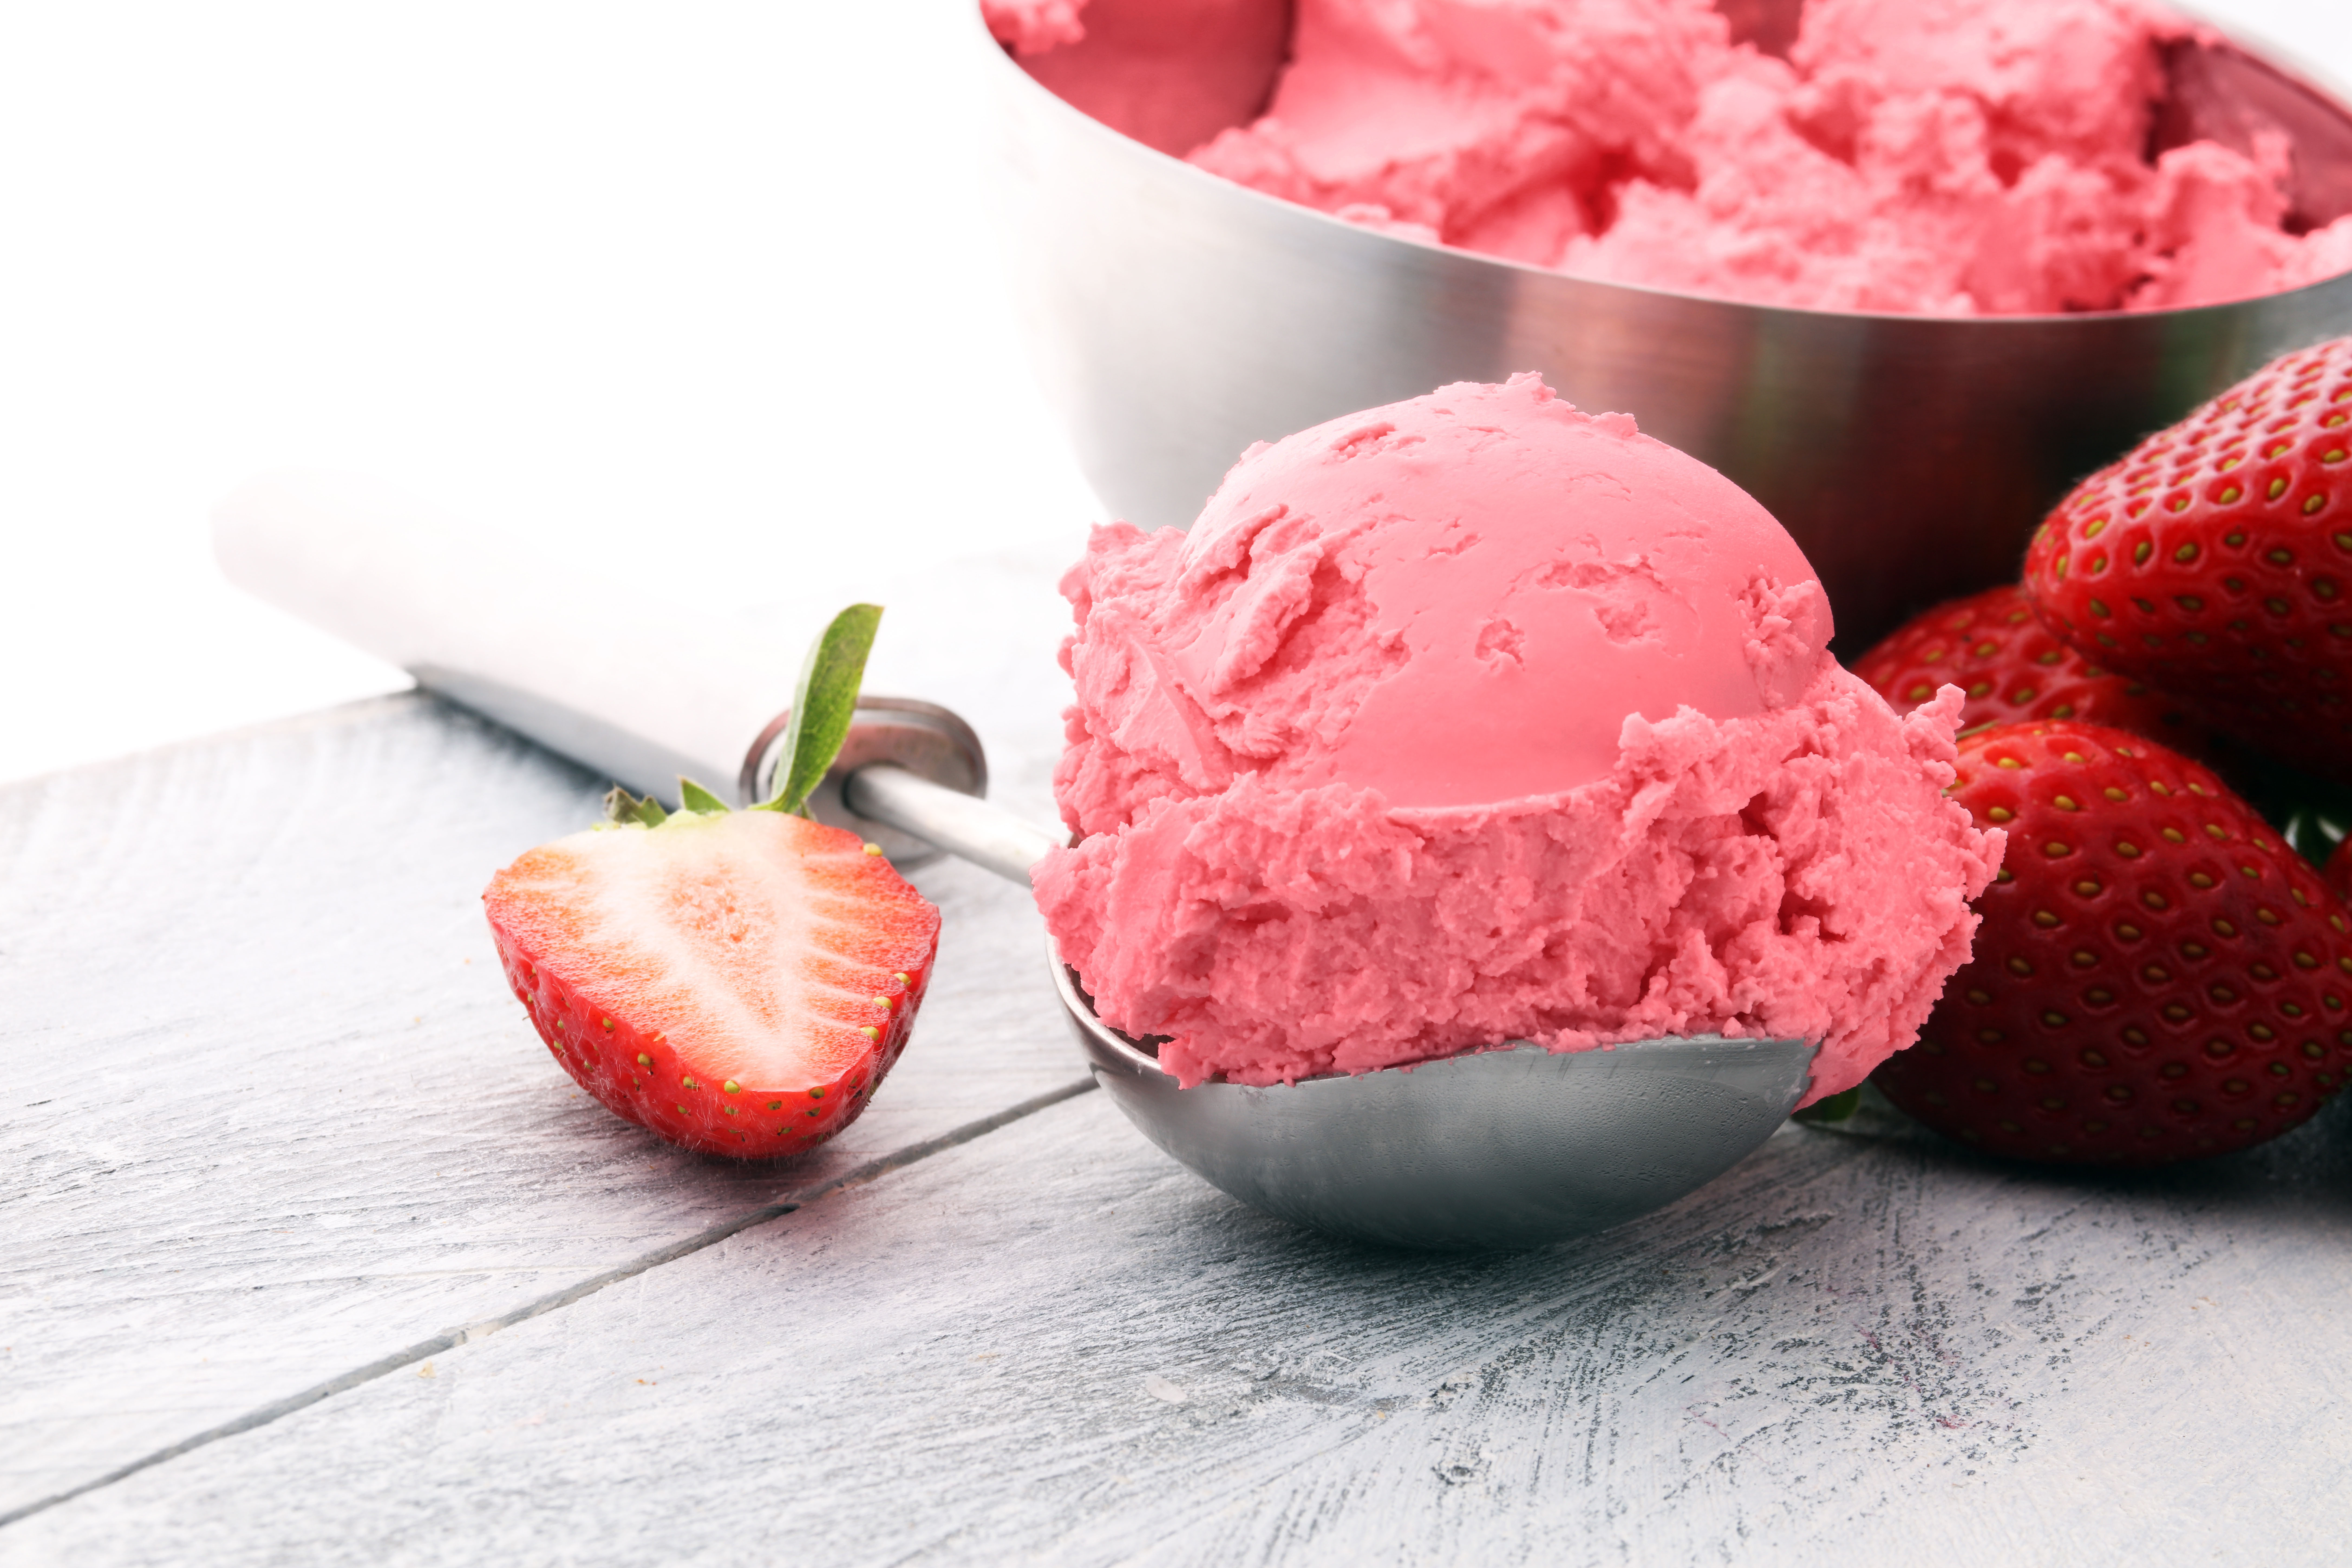 https://prod-app.breville.com/original/recipe/1650606175/Frozen+Berry+Yogurt.jpg